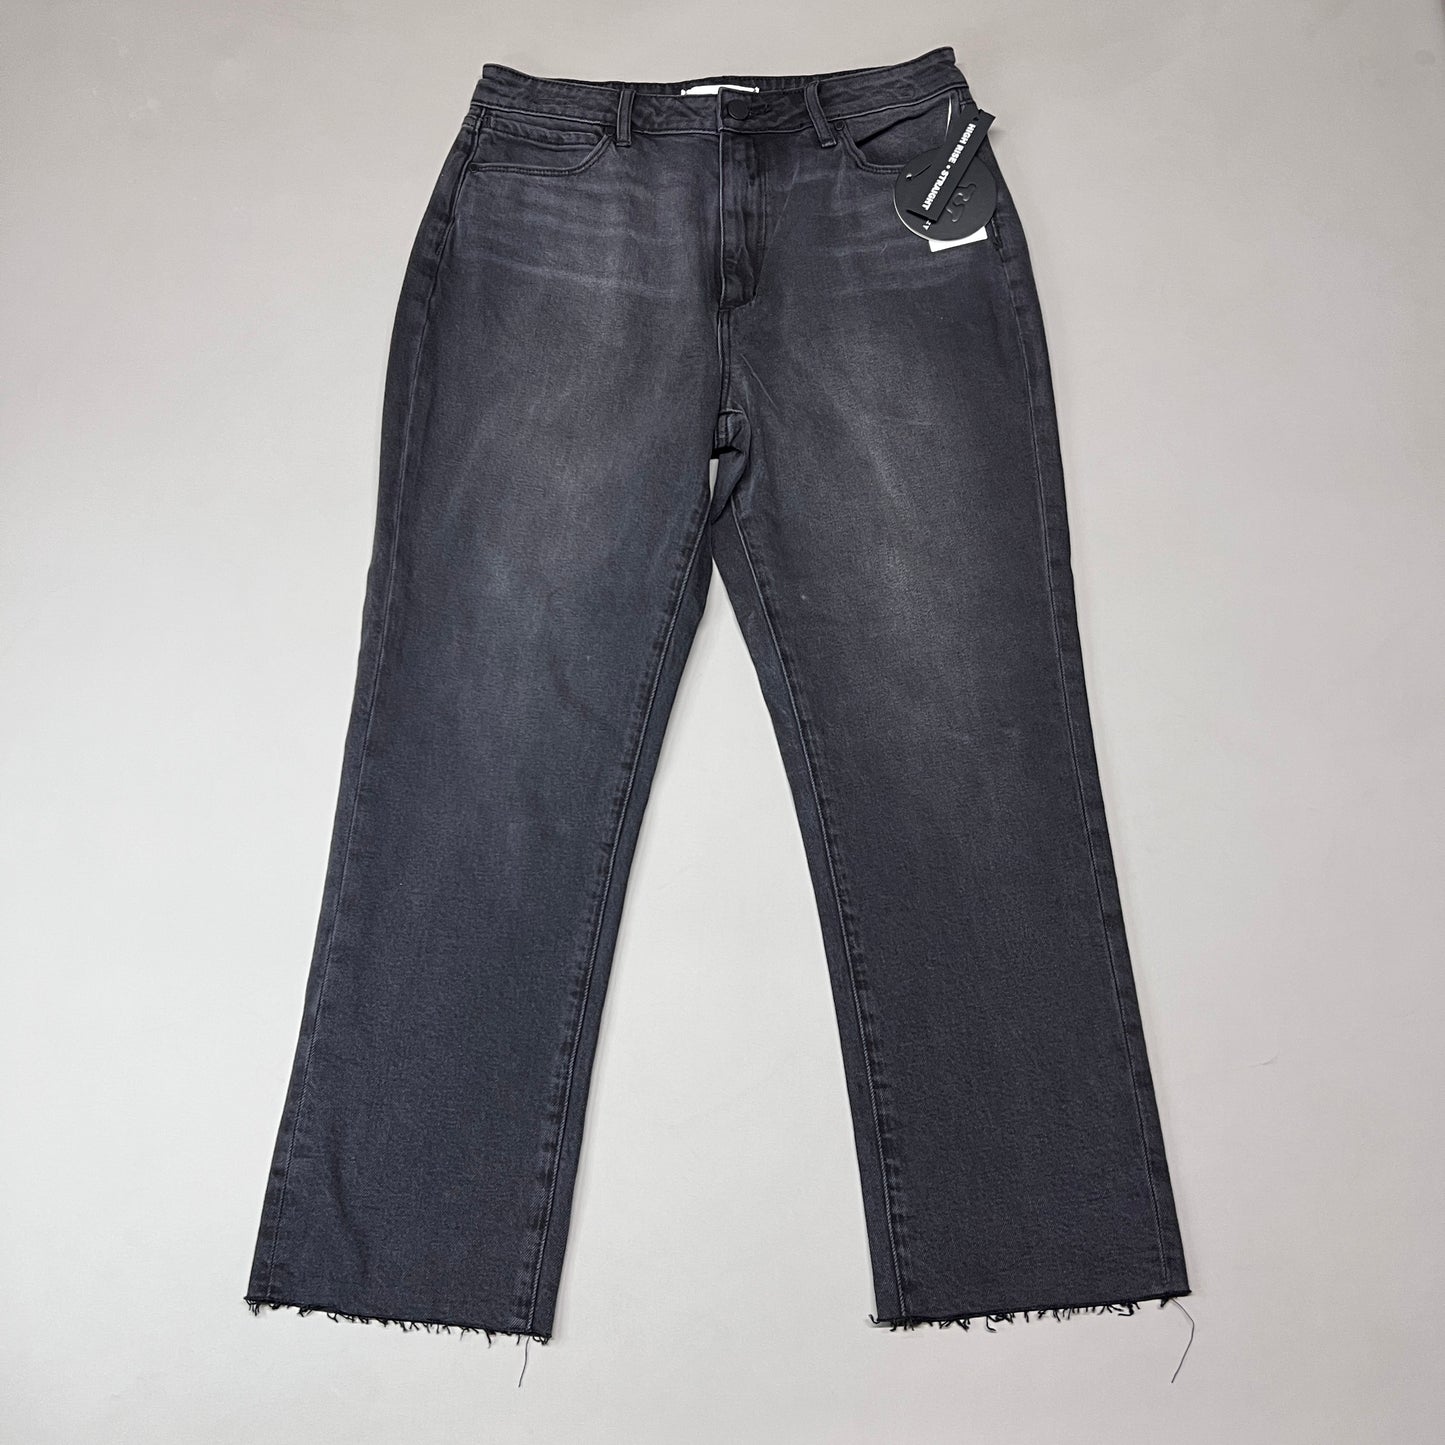 ARTICLES OF SOCIETY Kate Eleele Raw Hem Cropped Jeans Women's Sz 28 Black 4810TQB-720 (New)